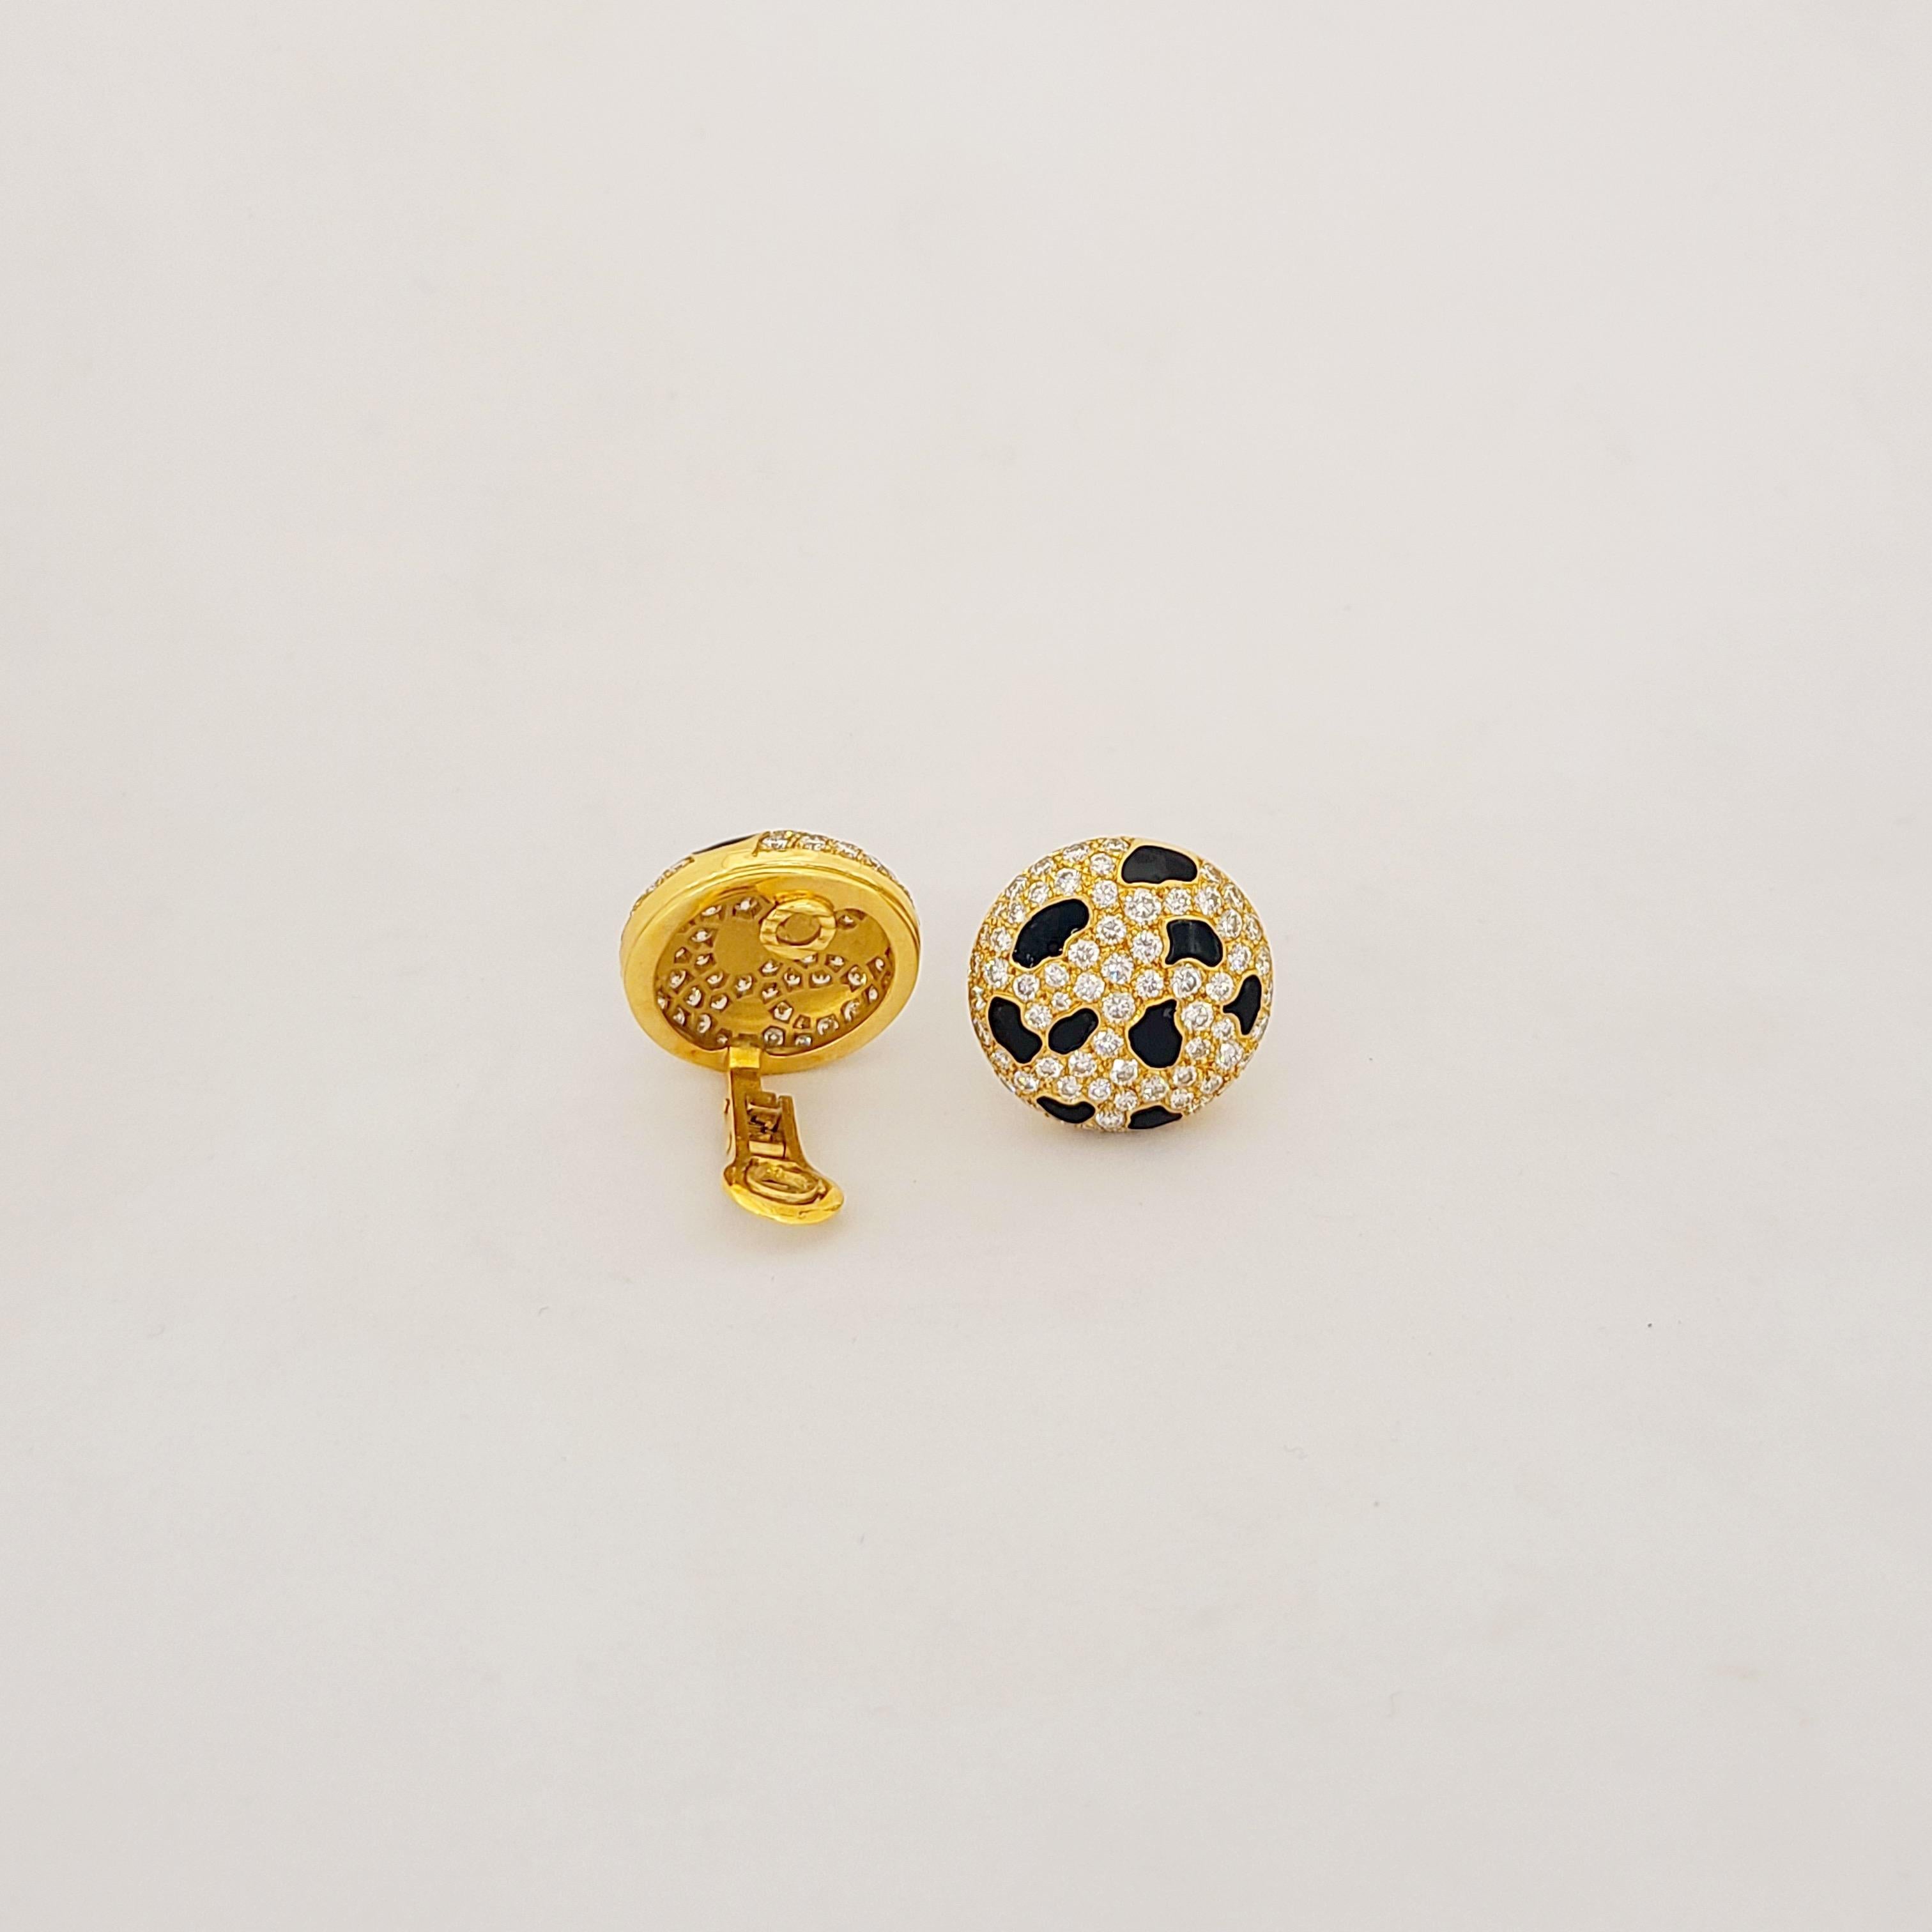 Gay Freres 18KT. Yellow Gold, 4.64 Carat Diamond & Black Enamel Button Earrings For Sale 2